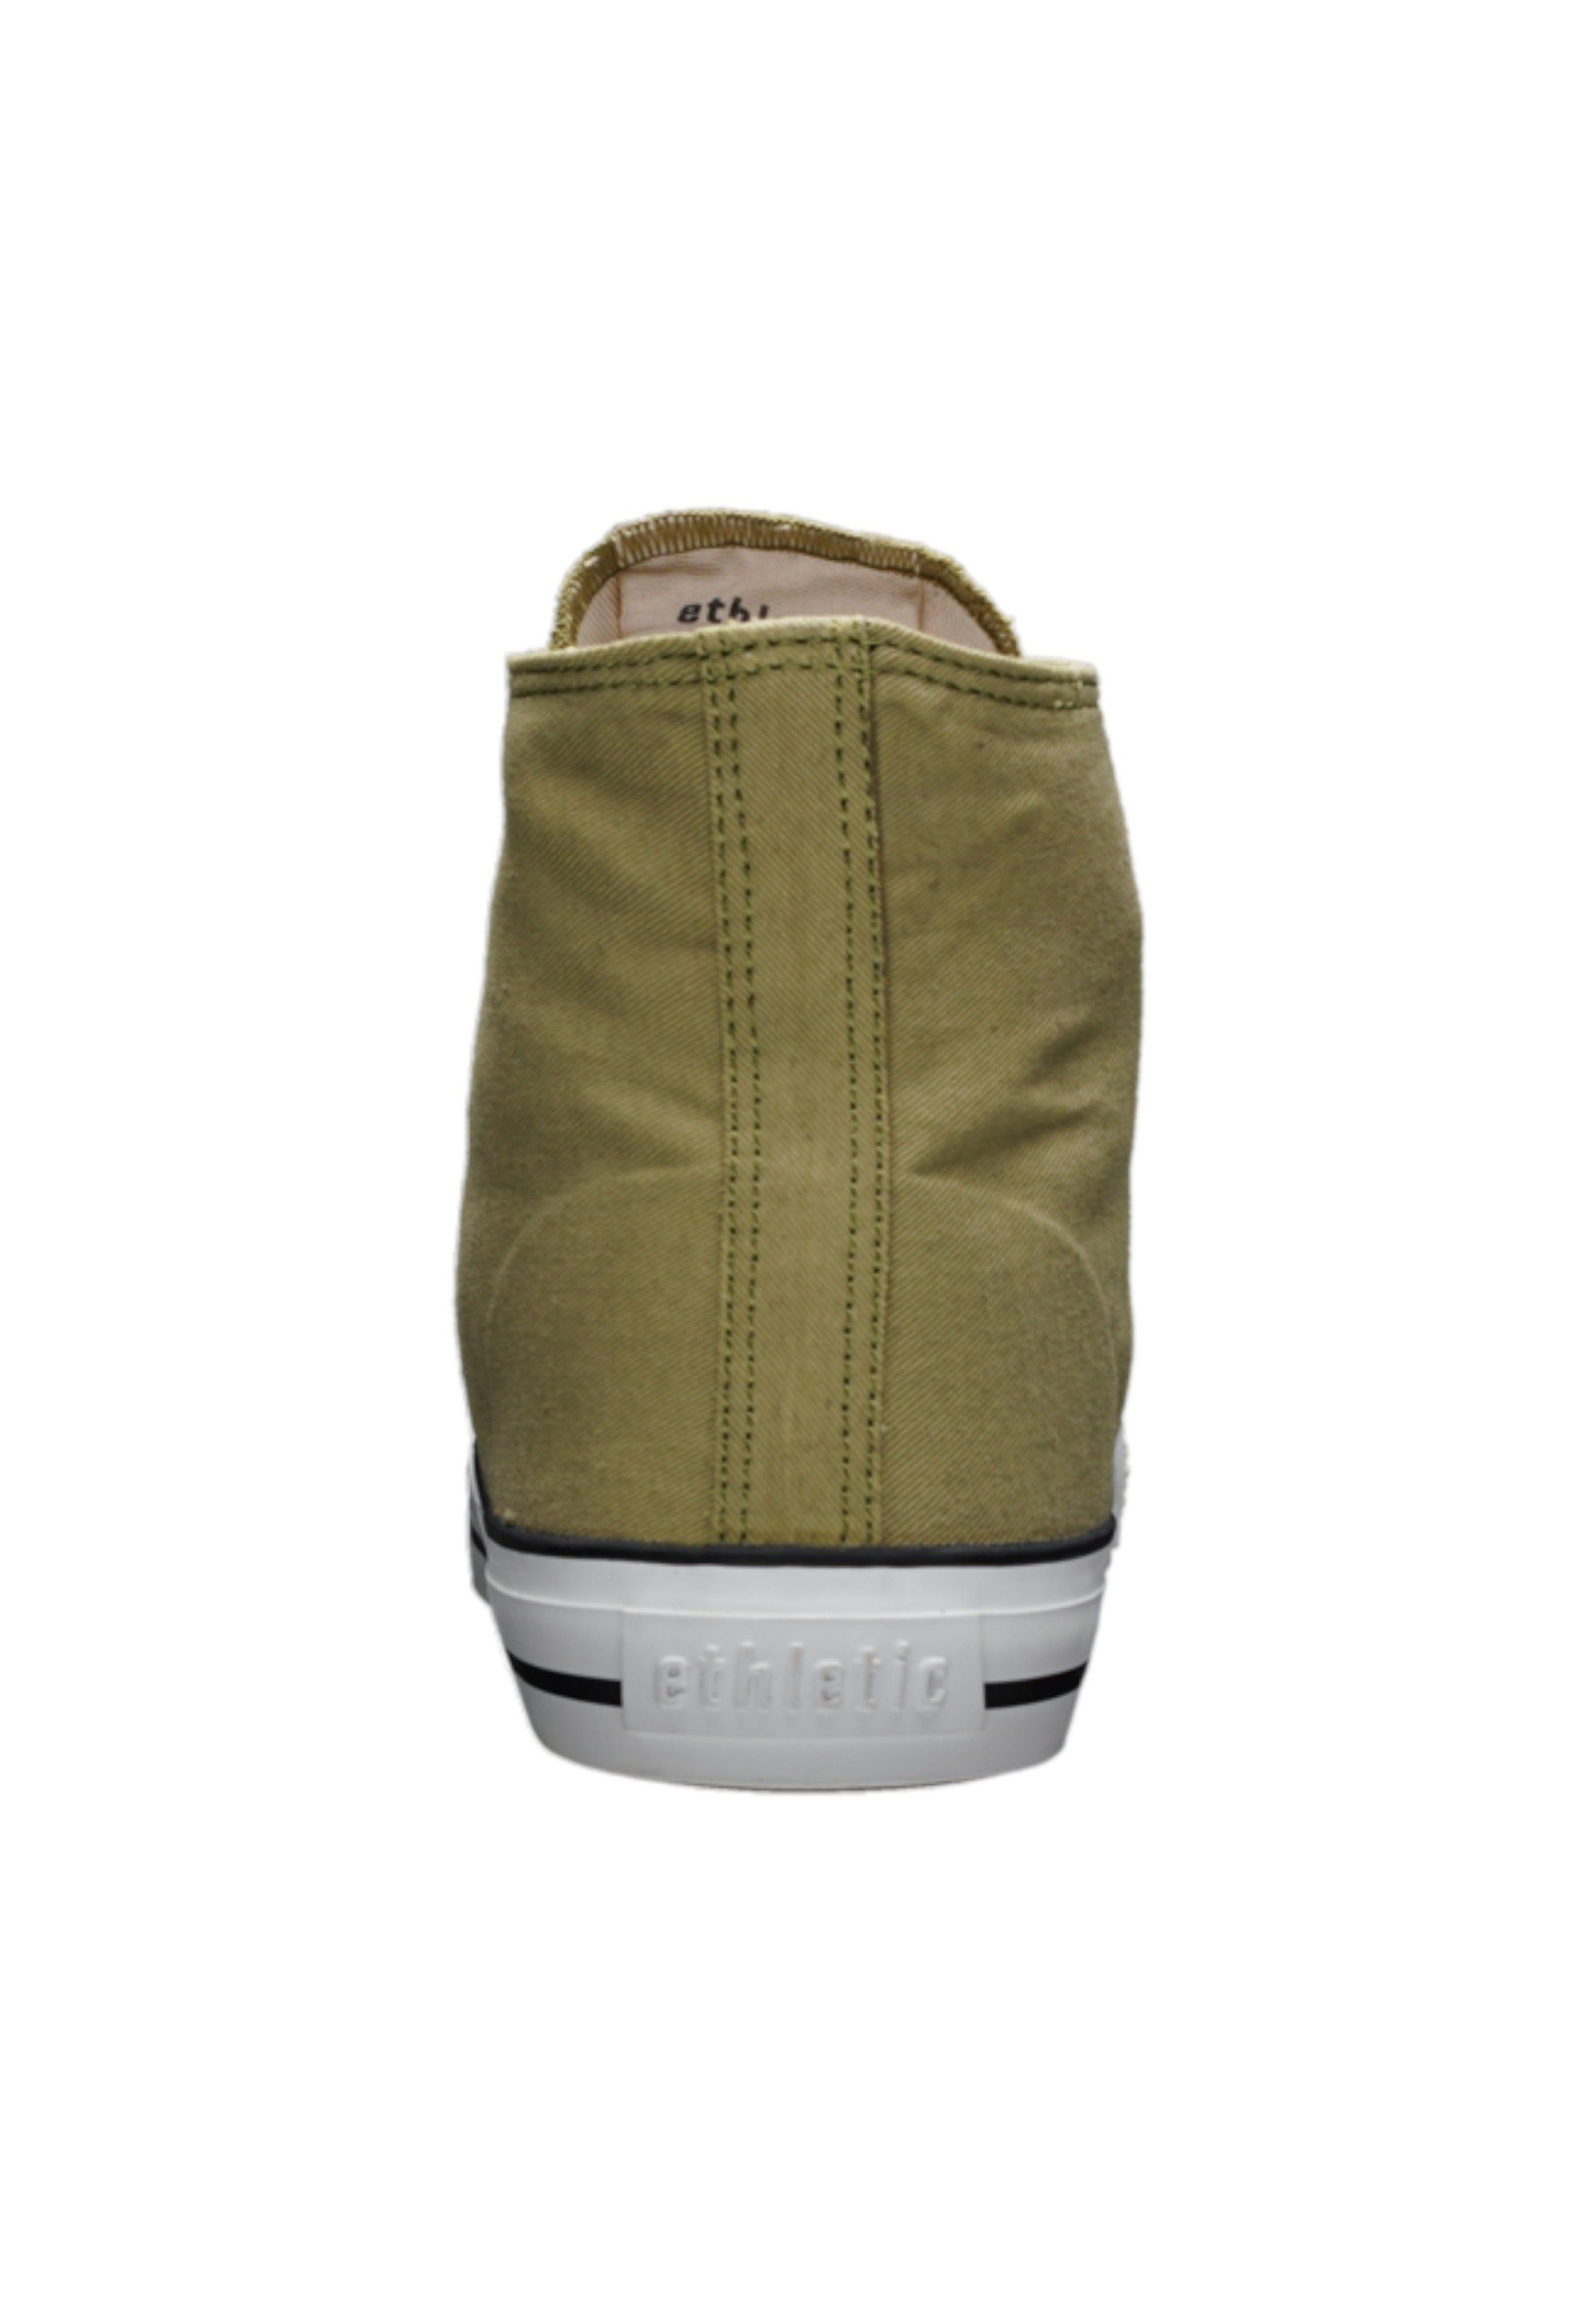 Just White Cap Produkt White Sneaker Hi Watersign Fairtrade - ETHLETIC Green Cut